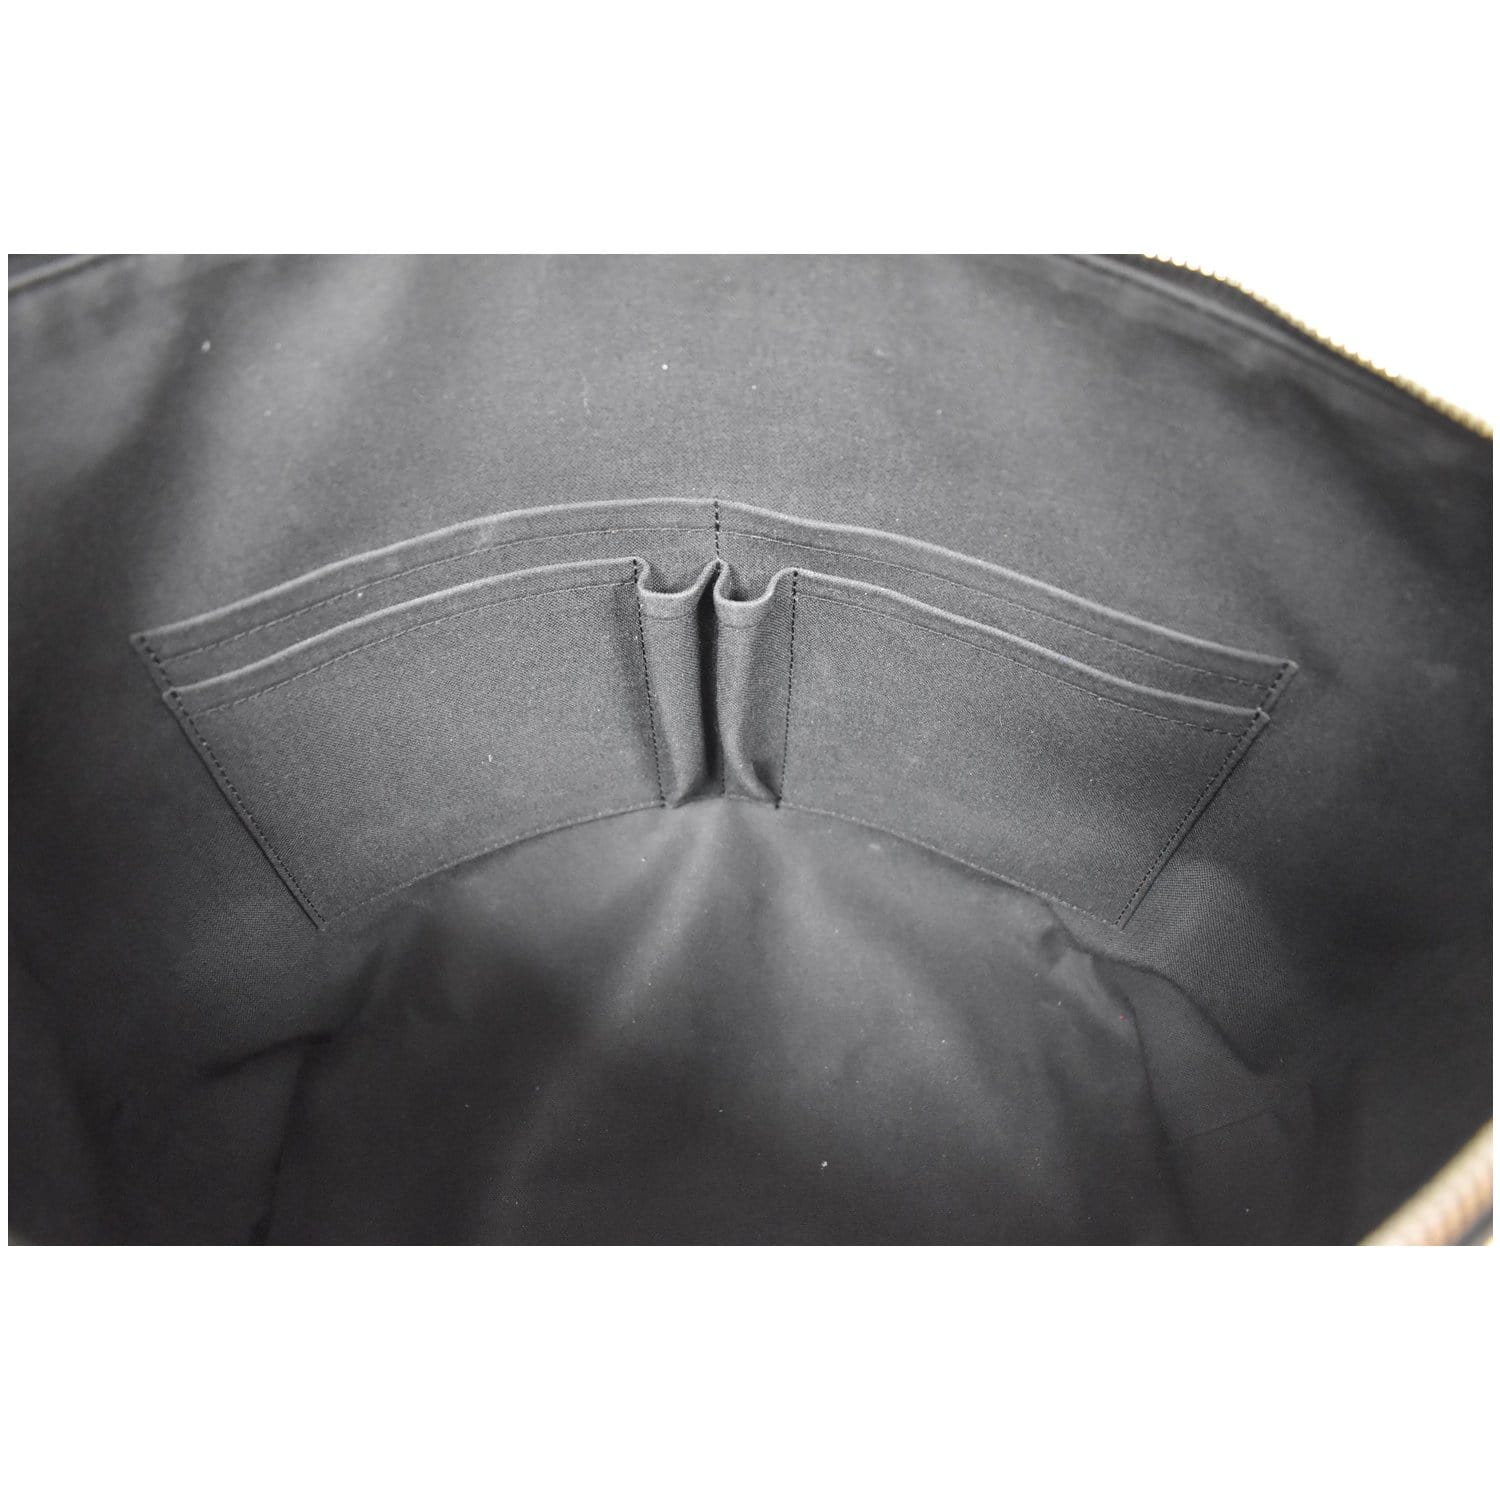 Louis Vuitton Damier Graphite Mick Gm Shoulder Bag N41105 #EY104-385